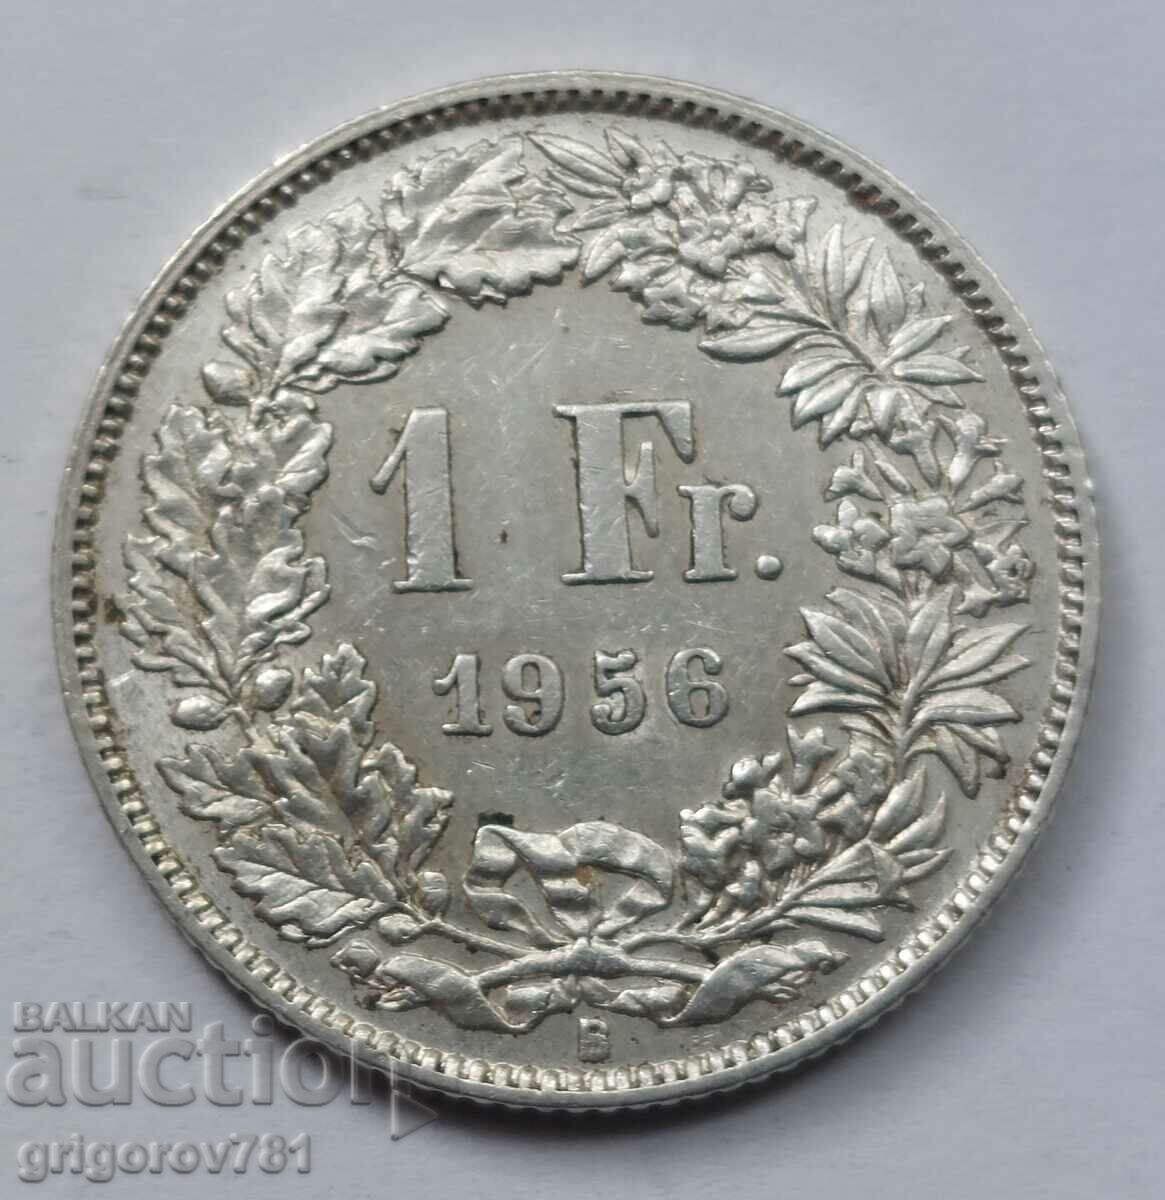 1 Franc Argint Elveția 1956 B - Monedă de argint #22